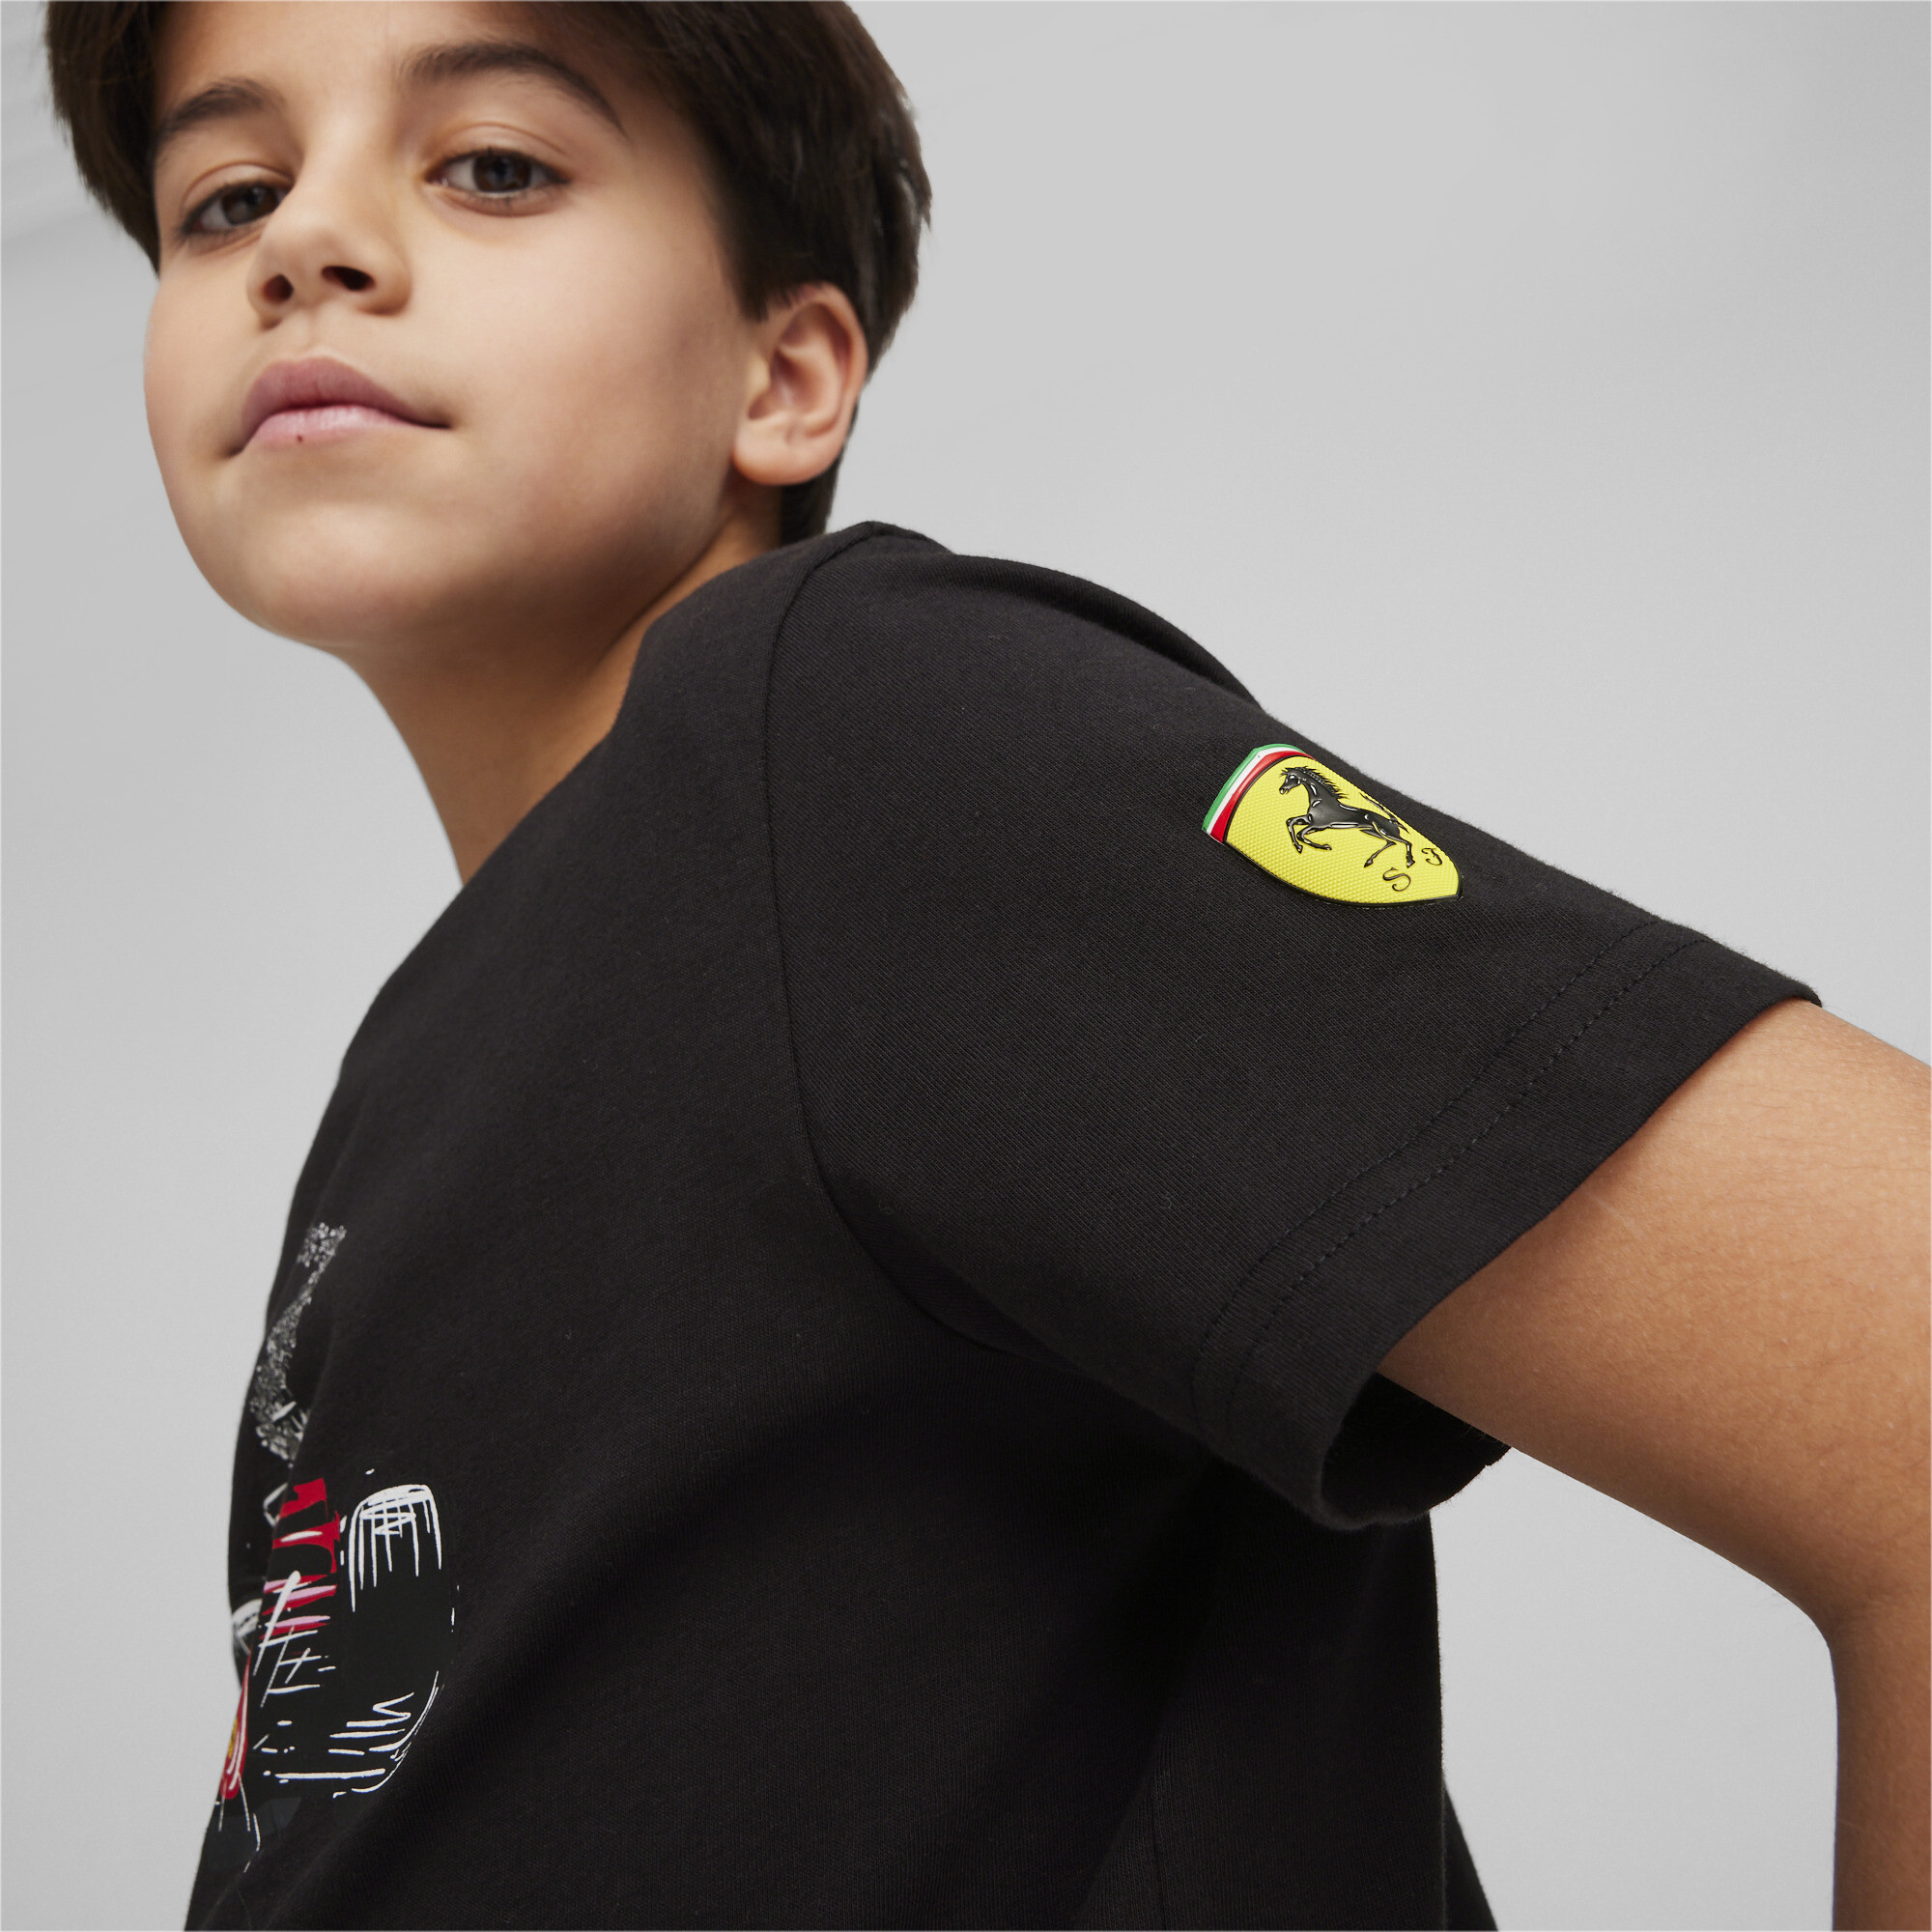 Puma Scuderia Ferrari Race Youth Motorsport Graphic T-Shirt, Black, Size 5-6Y, Clothing